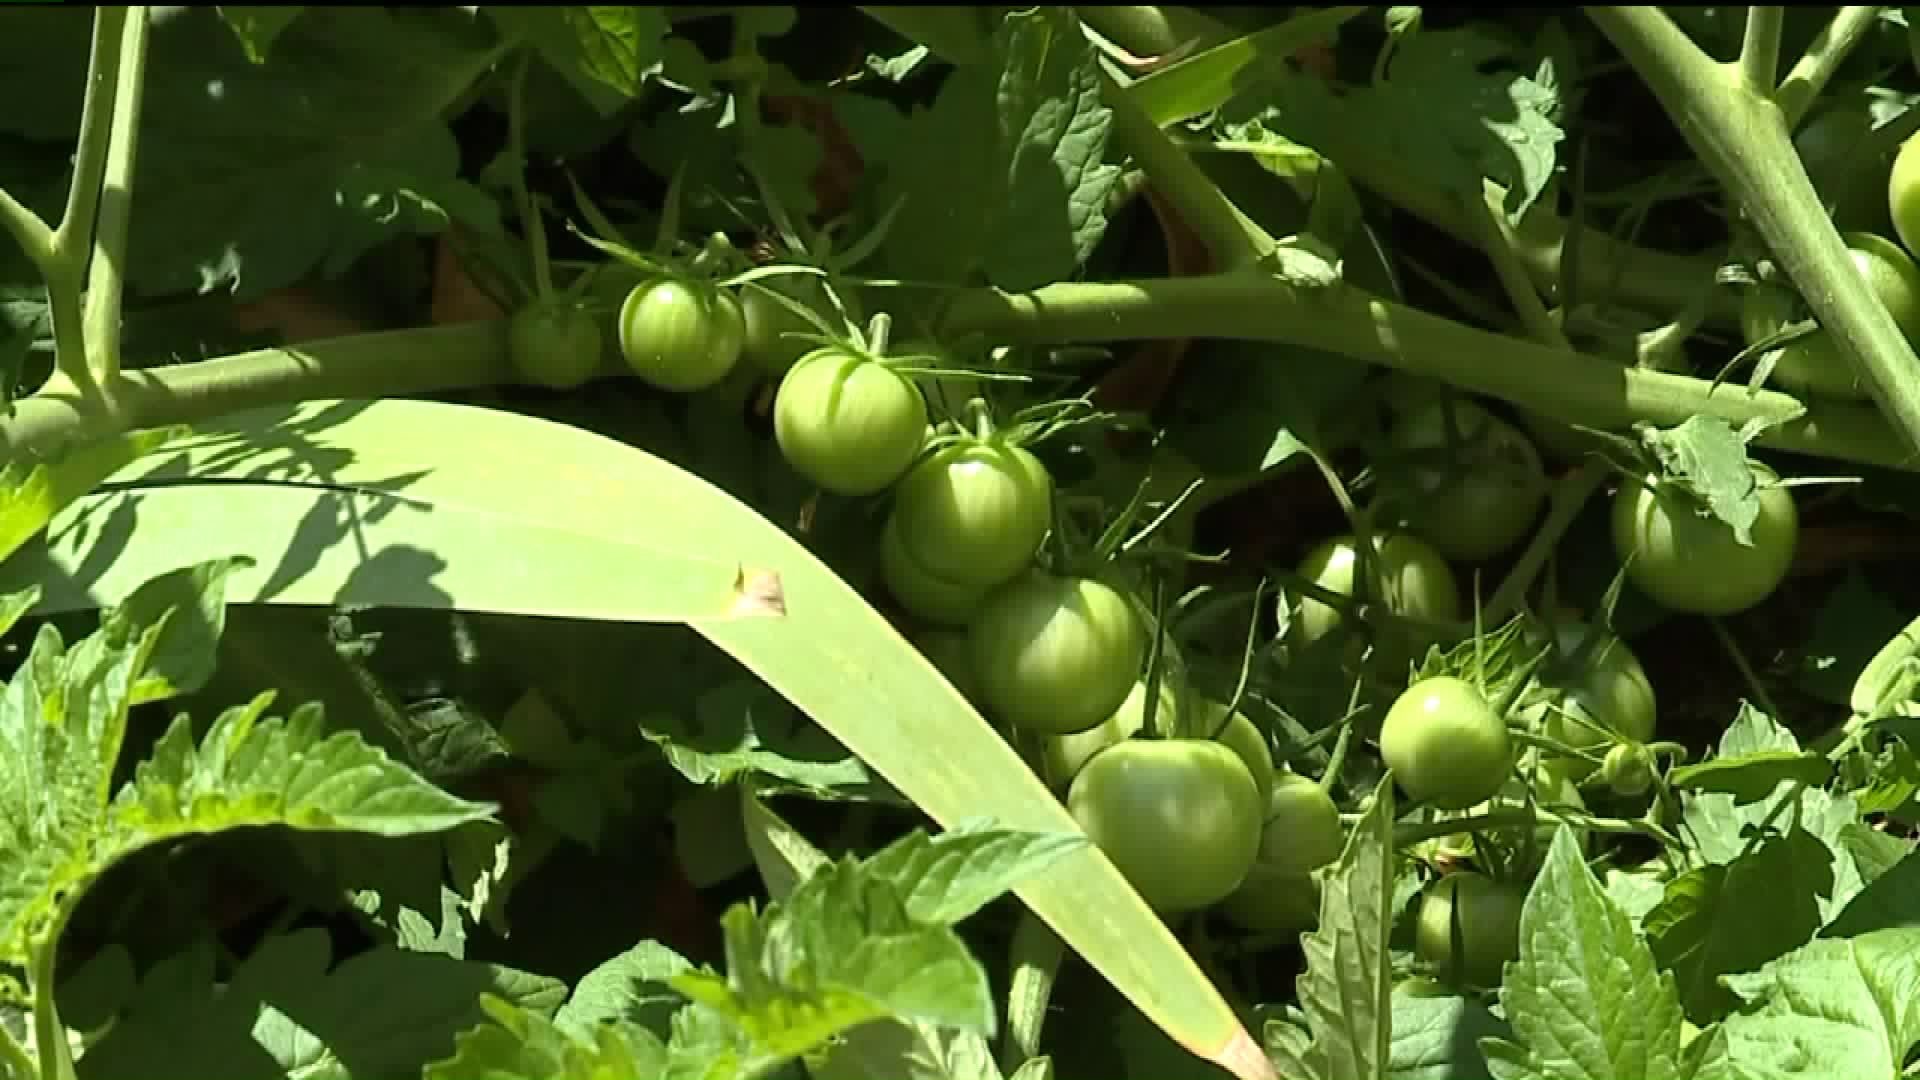 Lewisburg`s Largest Tomato Plant?